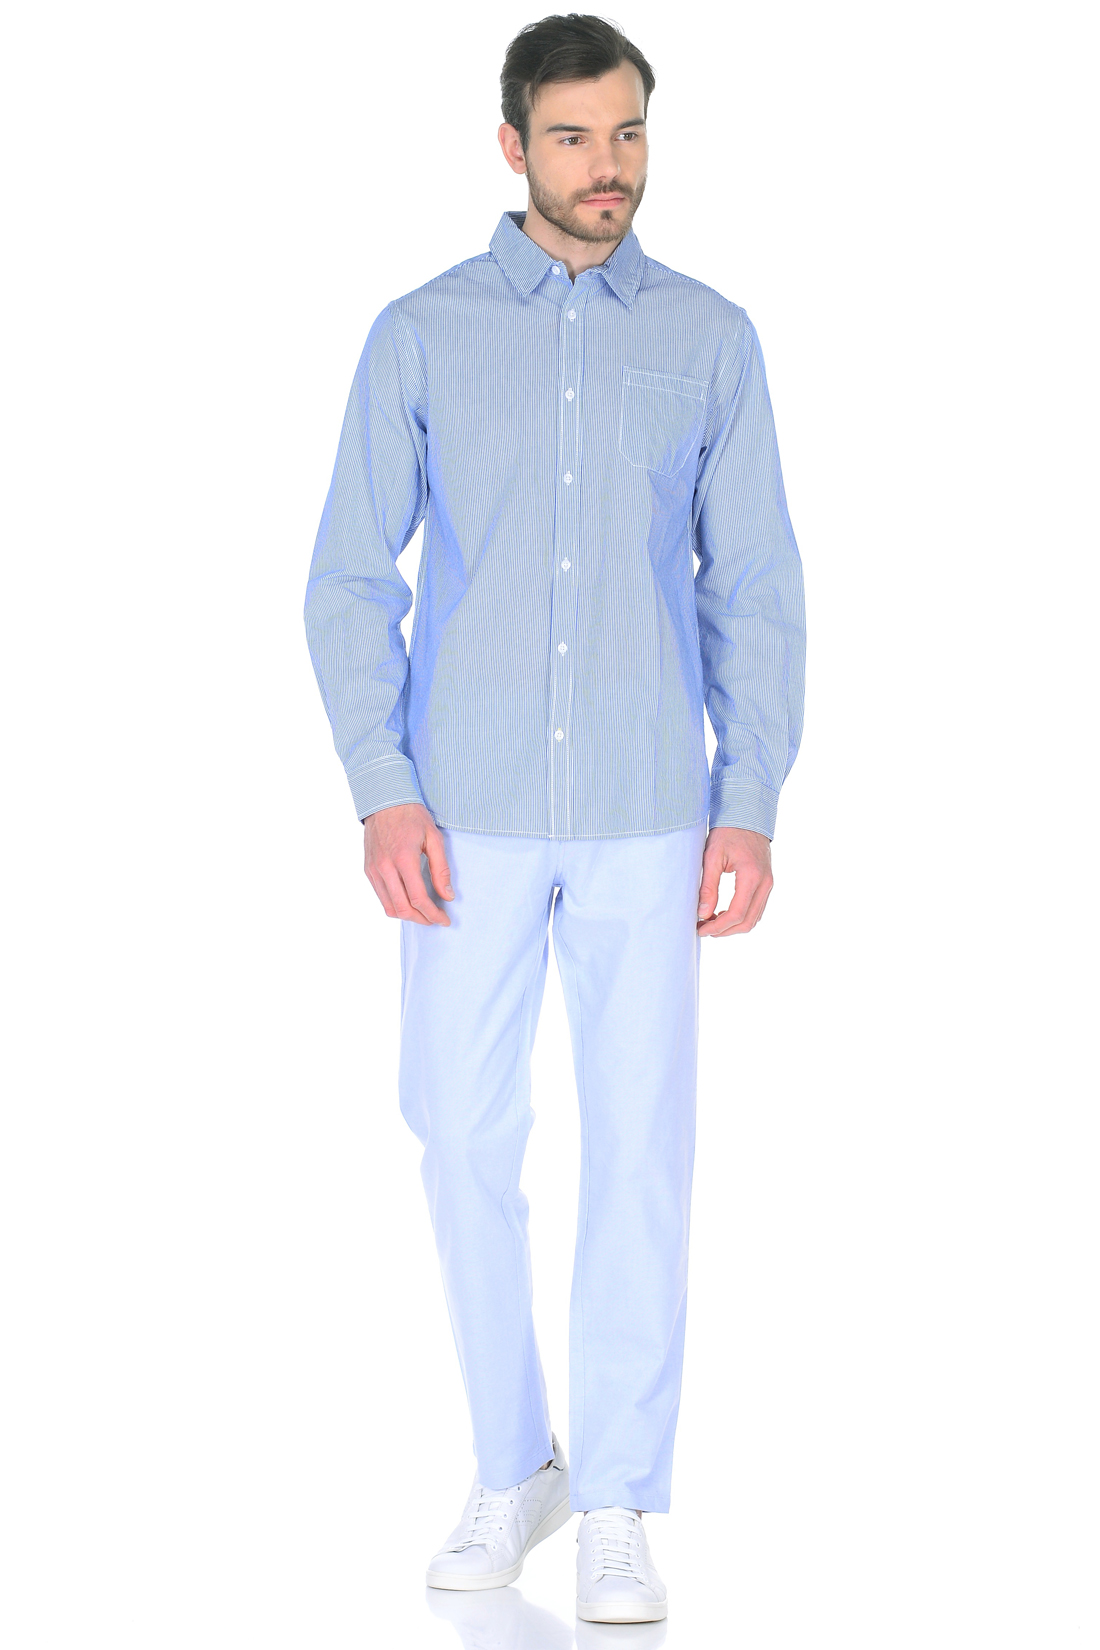 Рубашка в тонкую полоску (арт. baon B668012), размер M, цвет angel blue striped#голубой Рубашка в тонкую полоску (арт. baon B668012) - фото 3